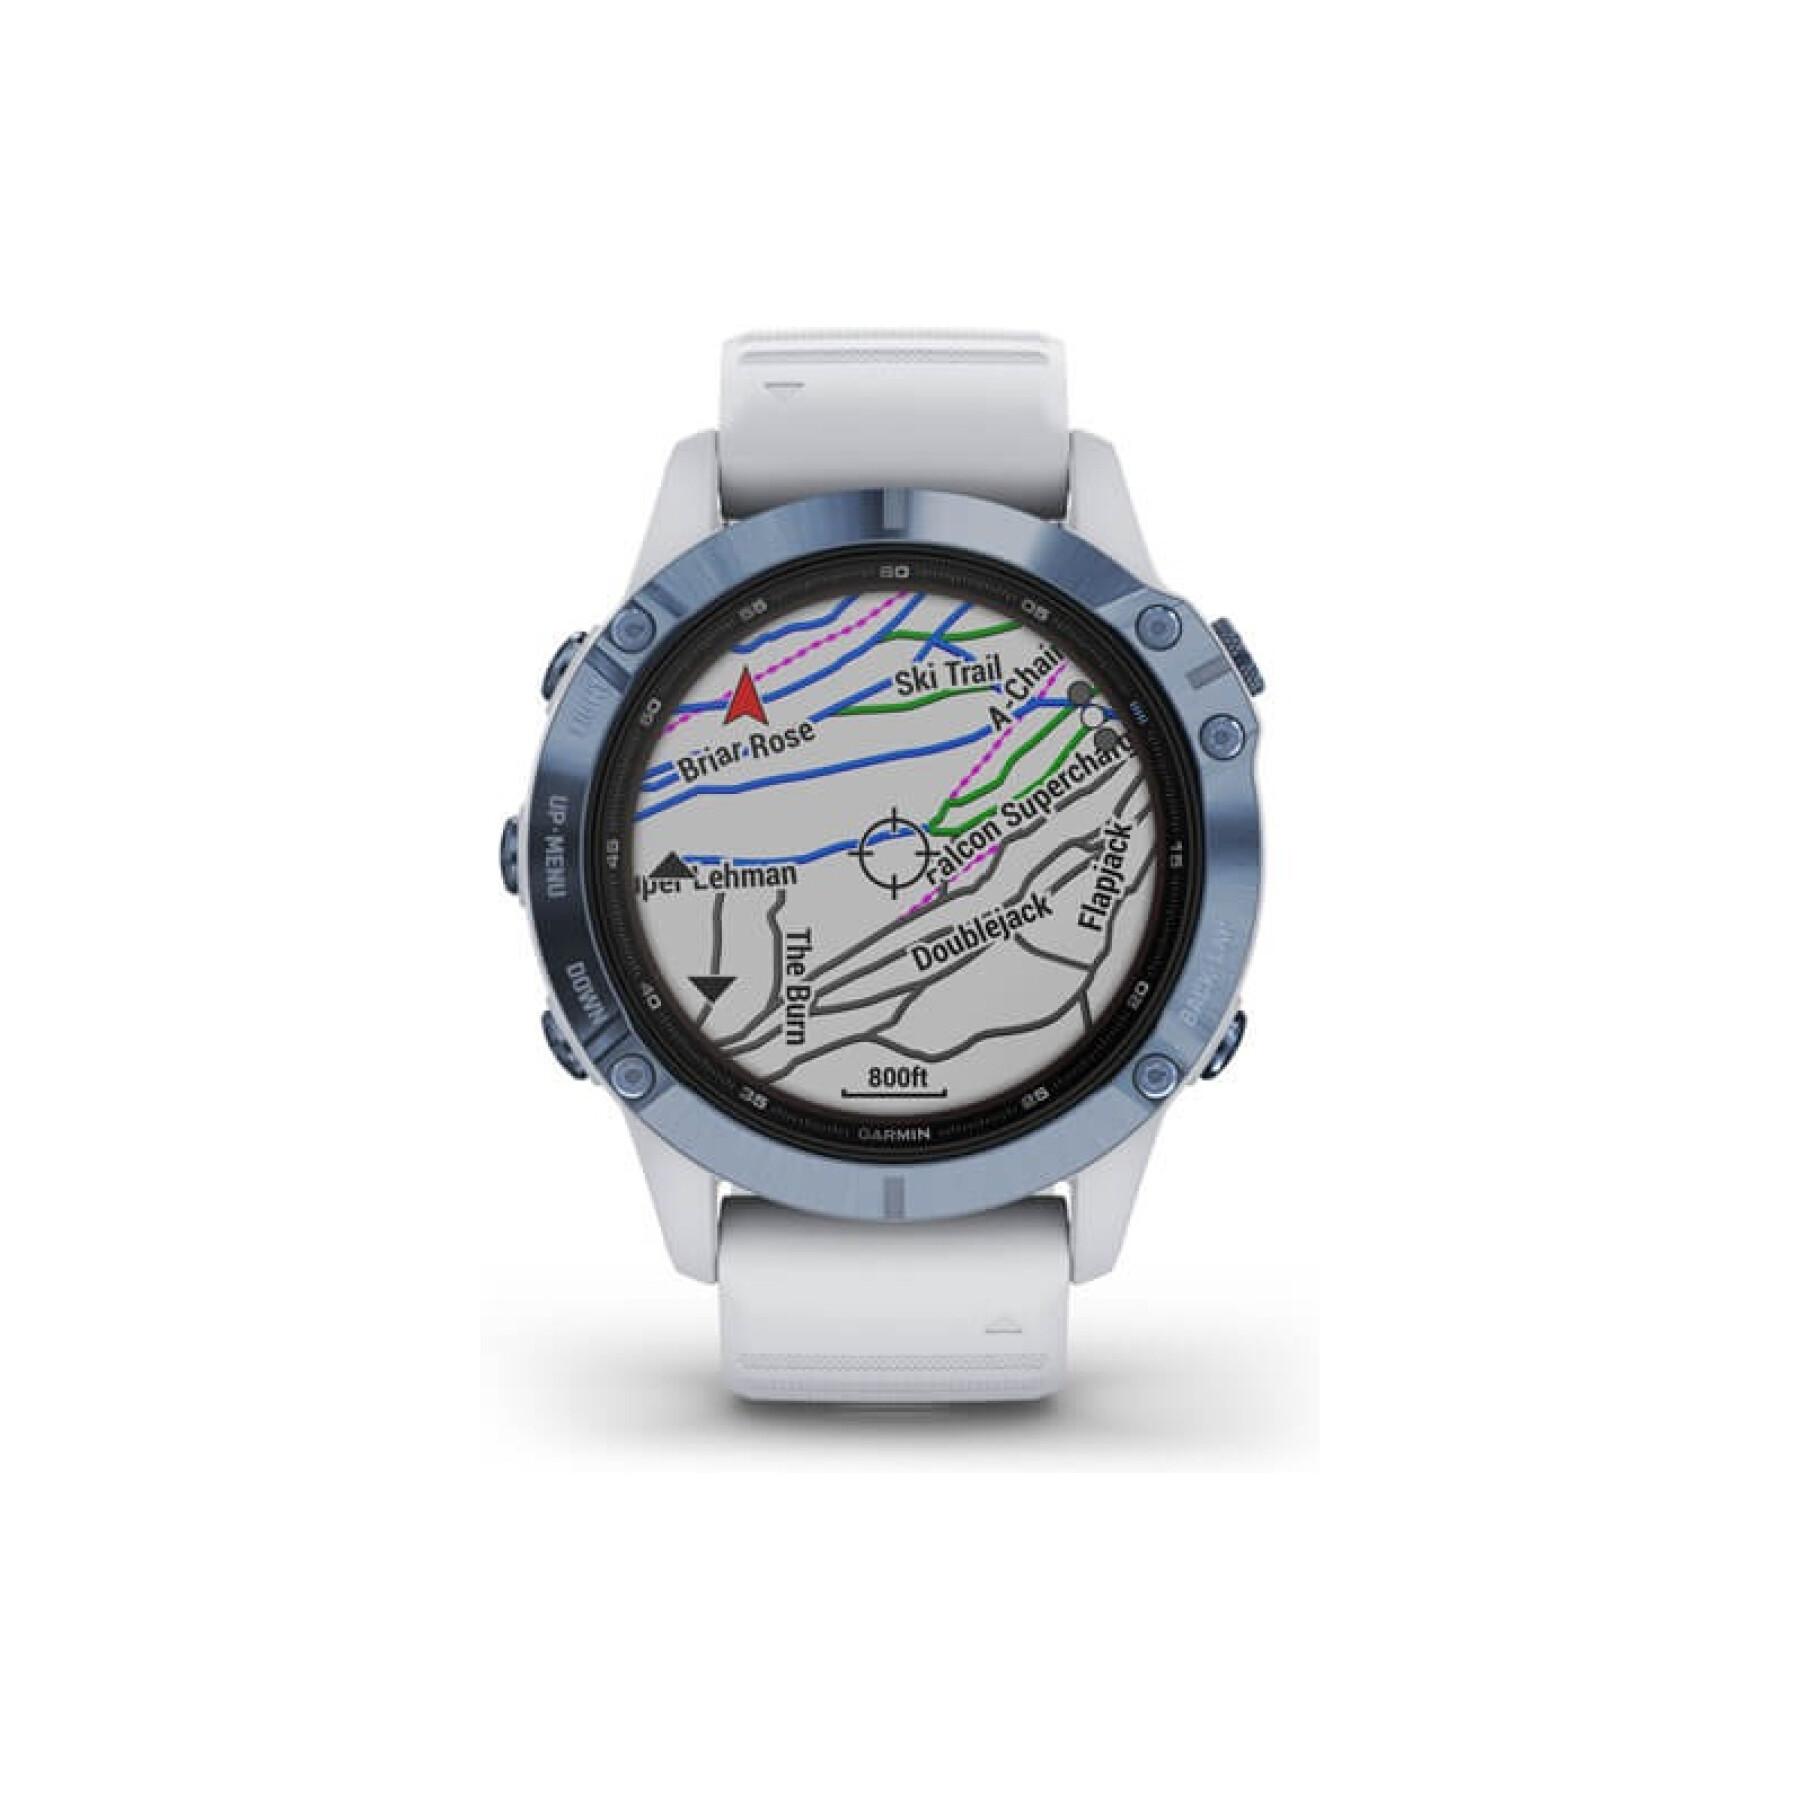 Garmin fēnix 6 pro solar watch